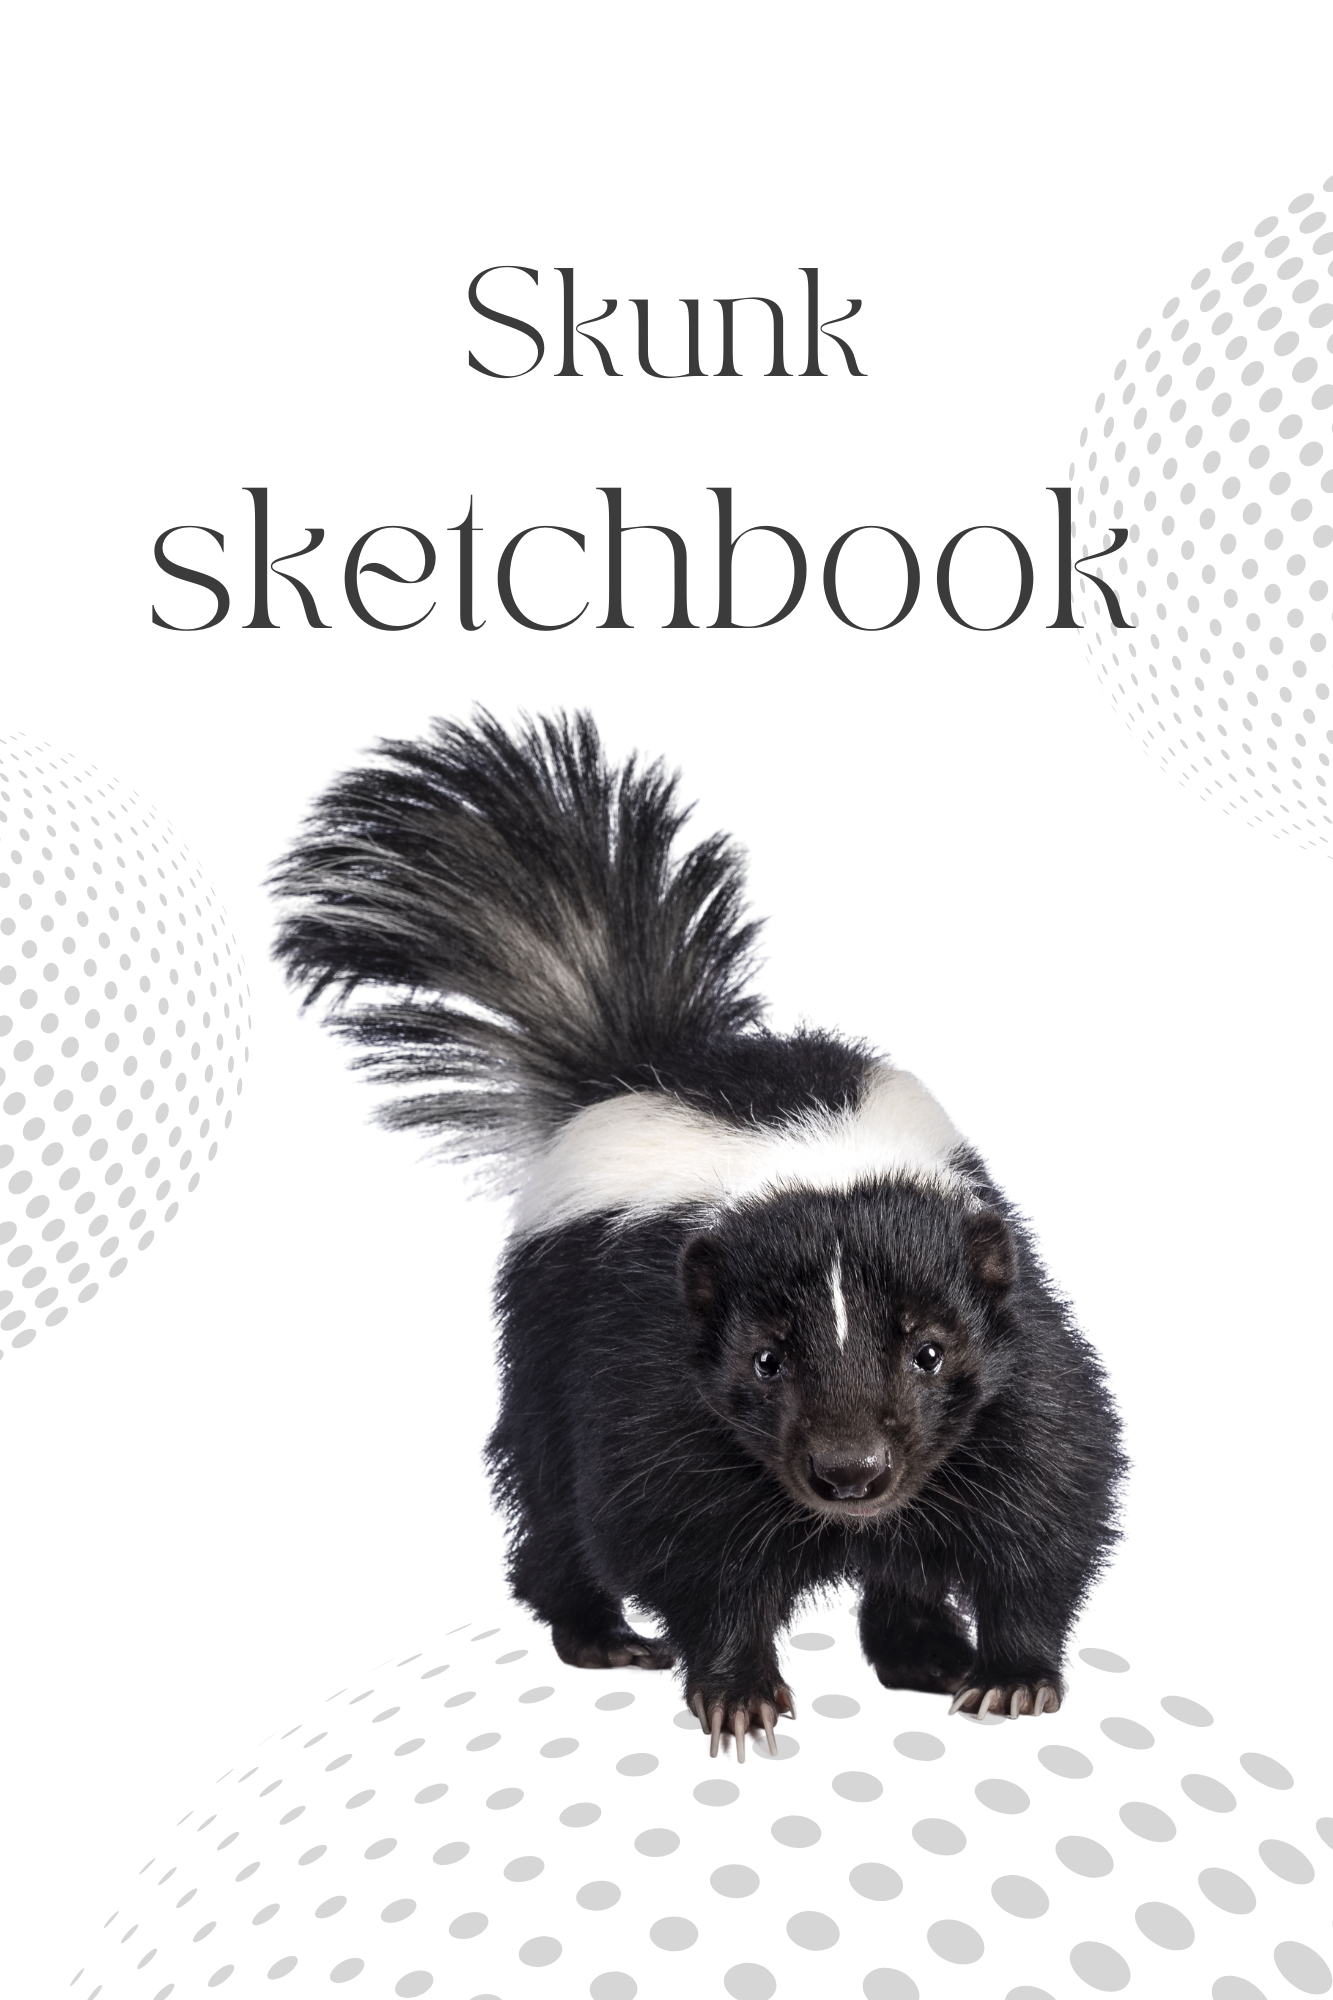 18-Skunk-SKETCHBOOK